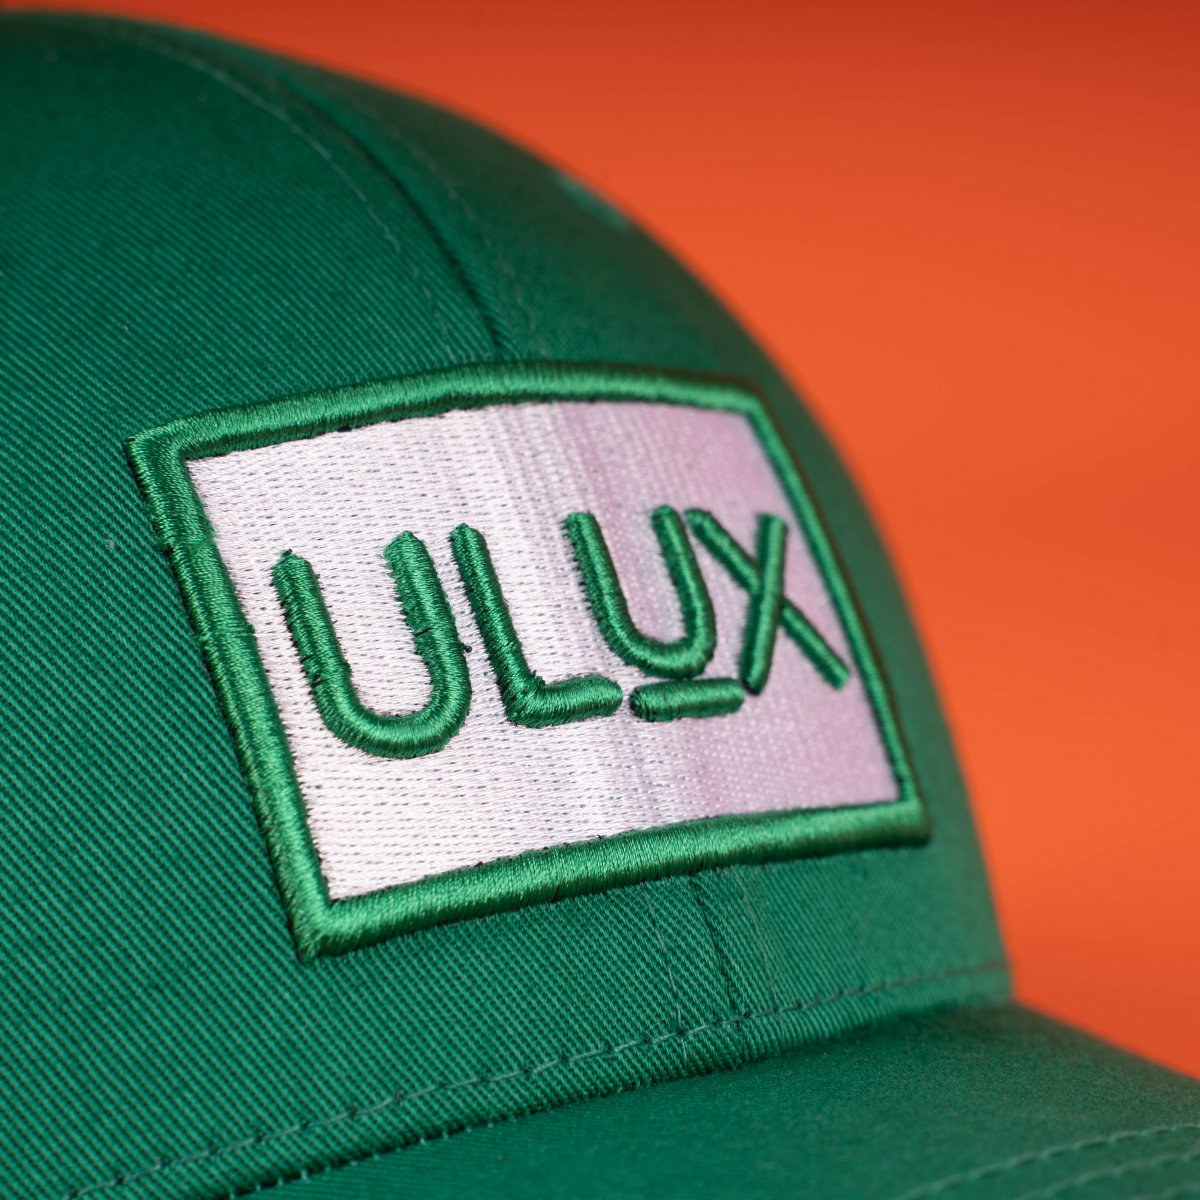 Mũ (nón) Golf Pro Cap ULUX UMG105-Xanh